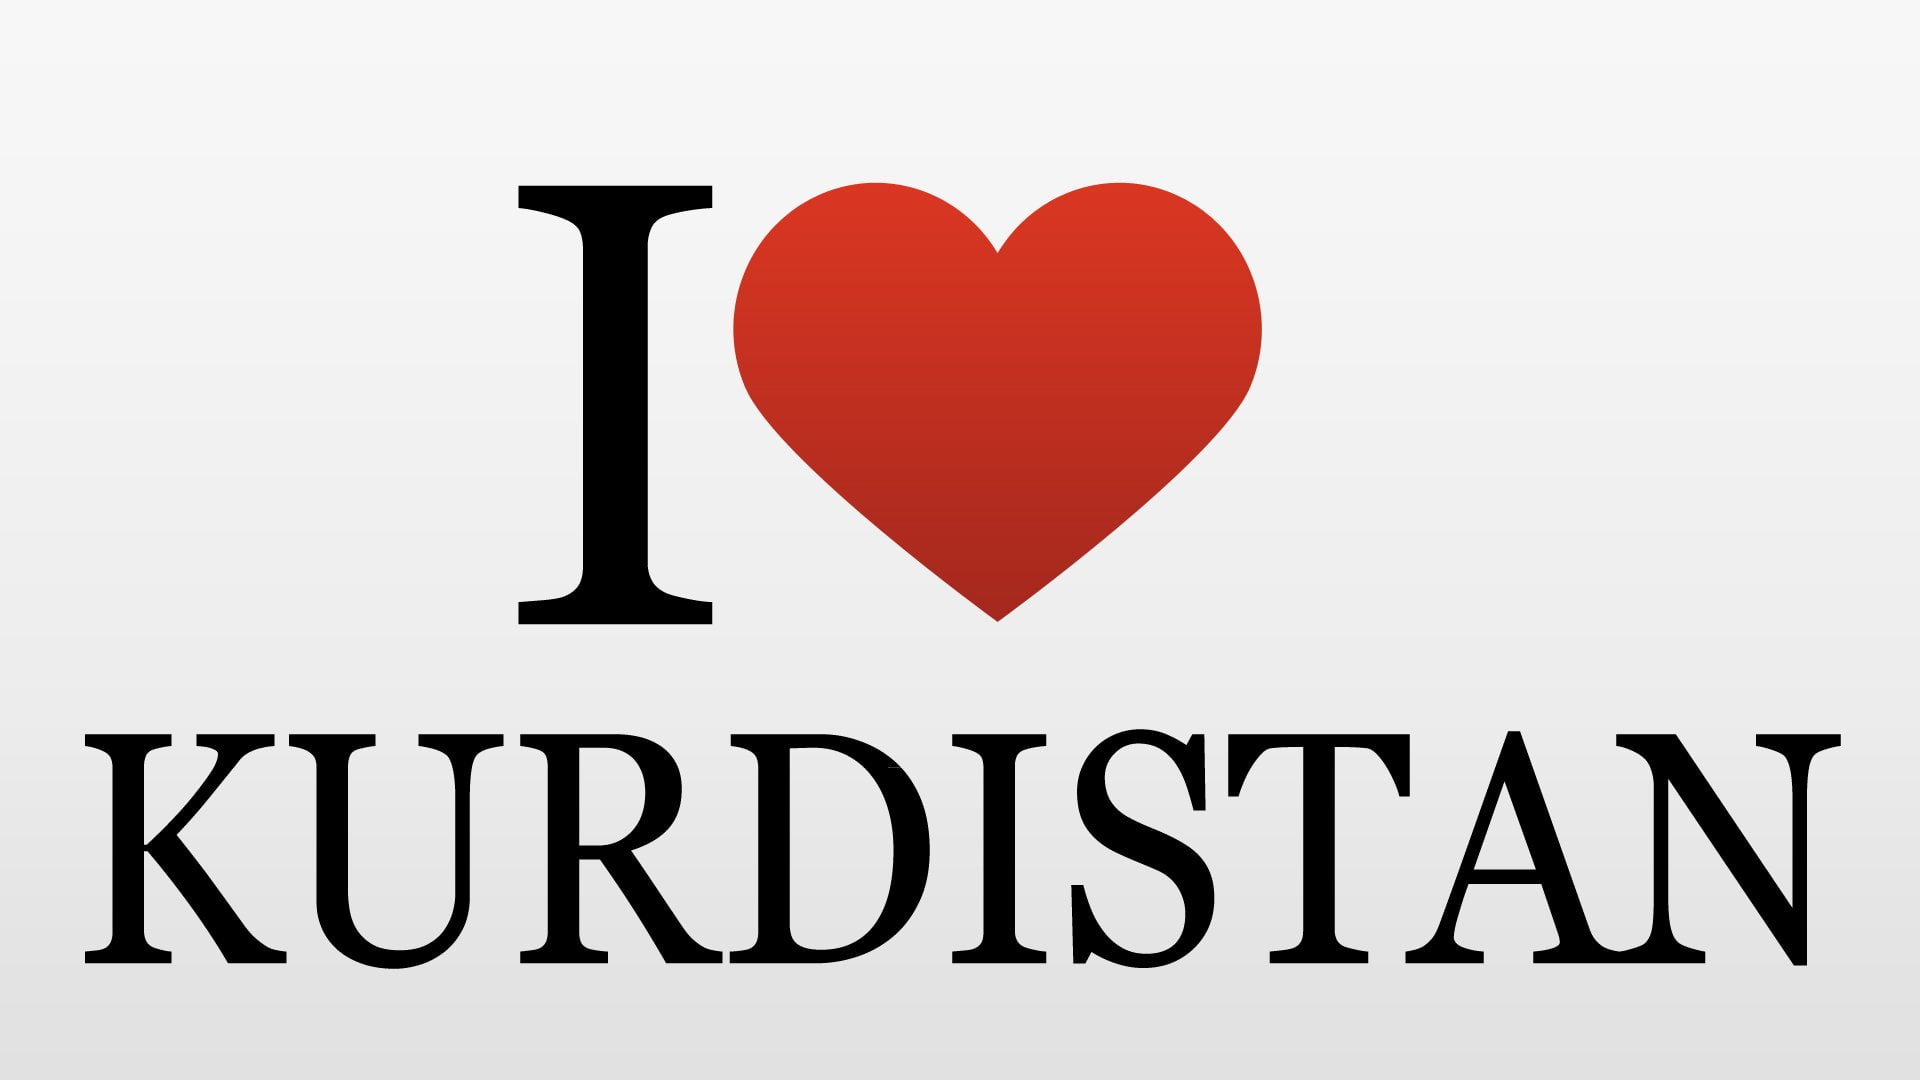 Kurd, Kurdish, Kurdistan, kurds, love, mood, poster, positive emotion